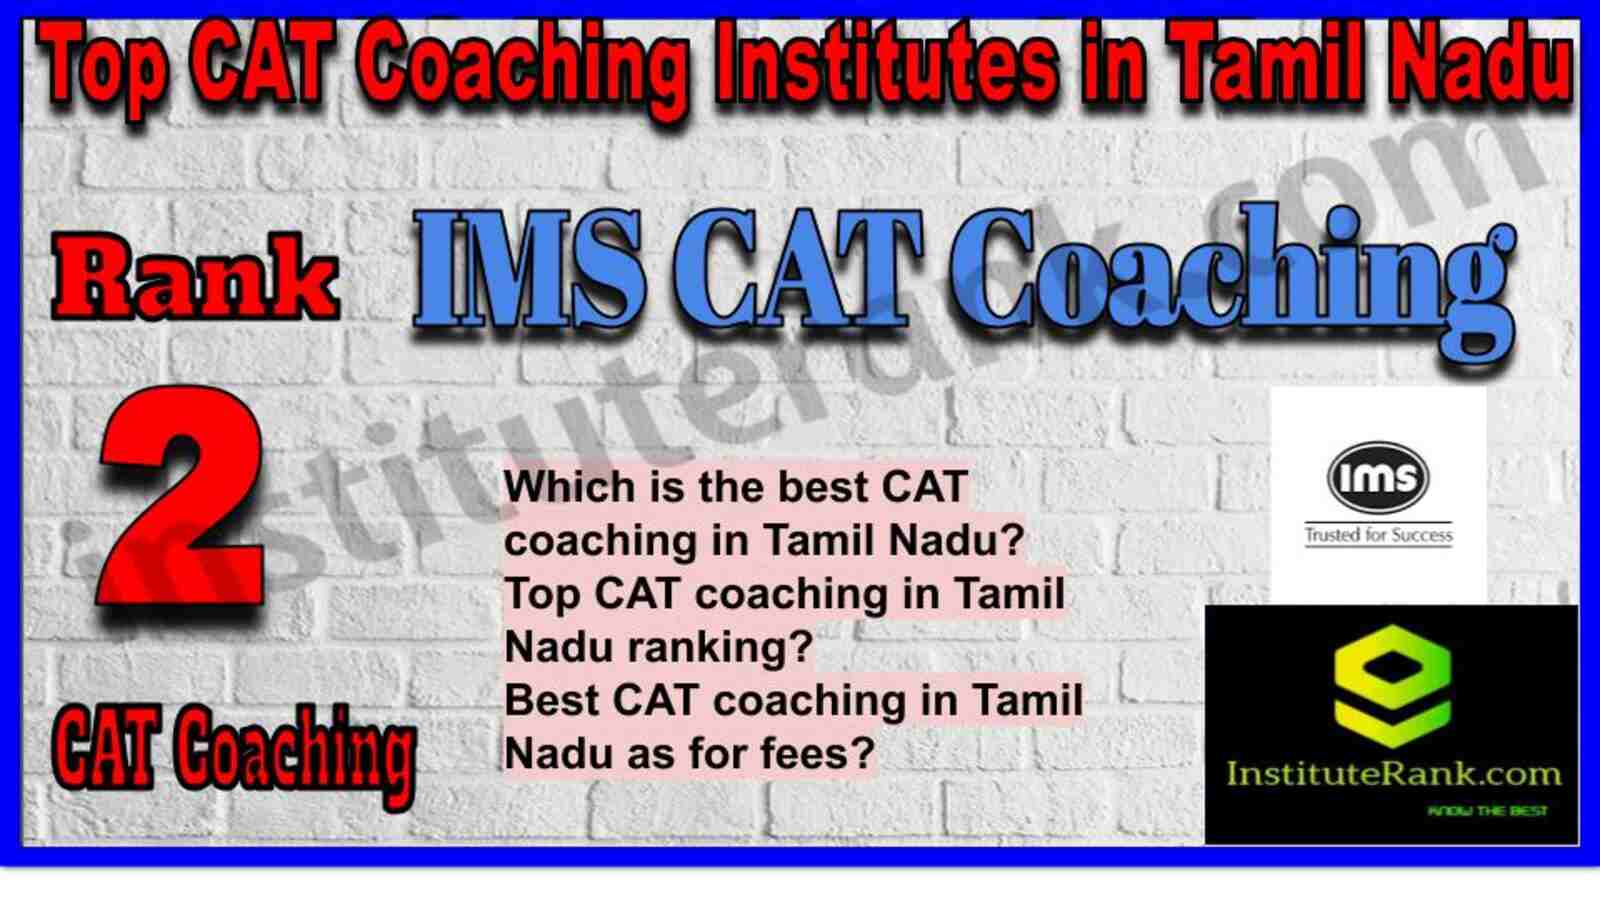 Rank 2. IMS CAT Coaching in Tamil Nadu